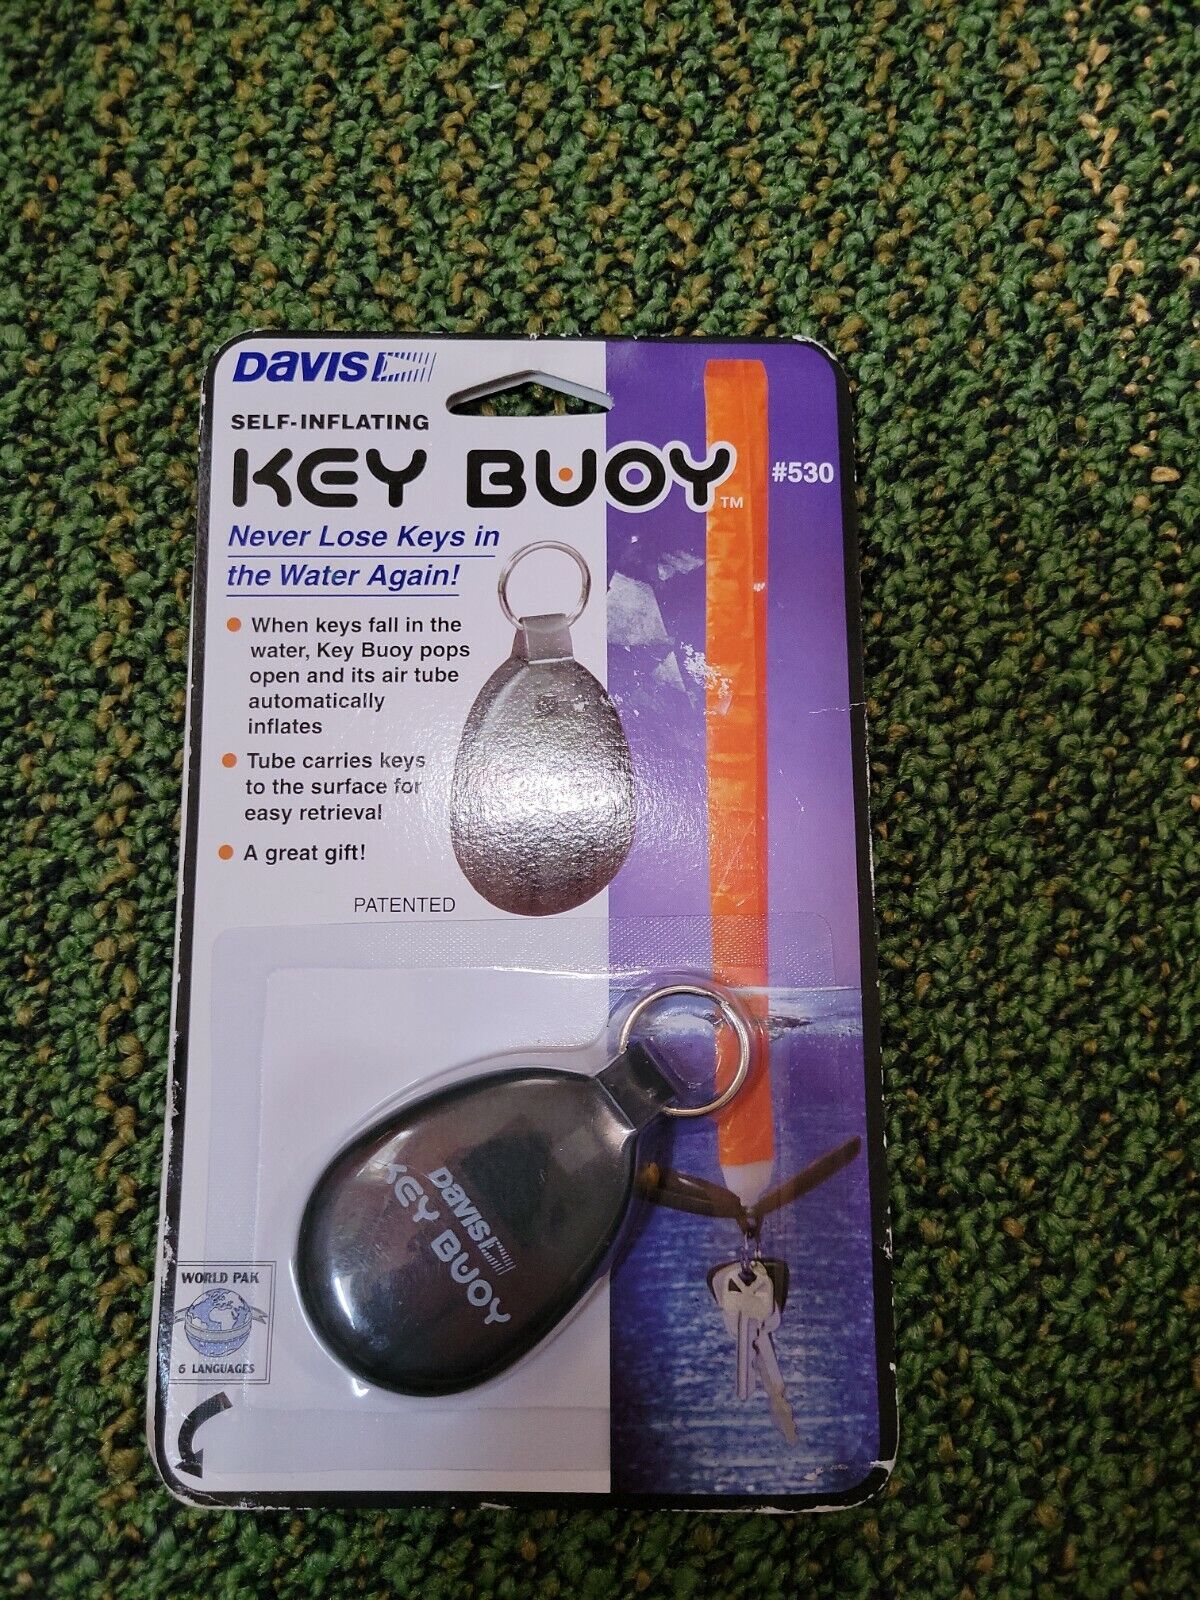 Davis Brand new Instruments 530 Self-Inflating Bouy # Super sale Key